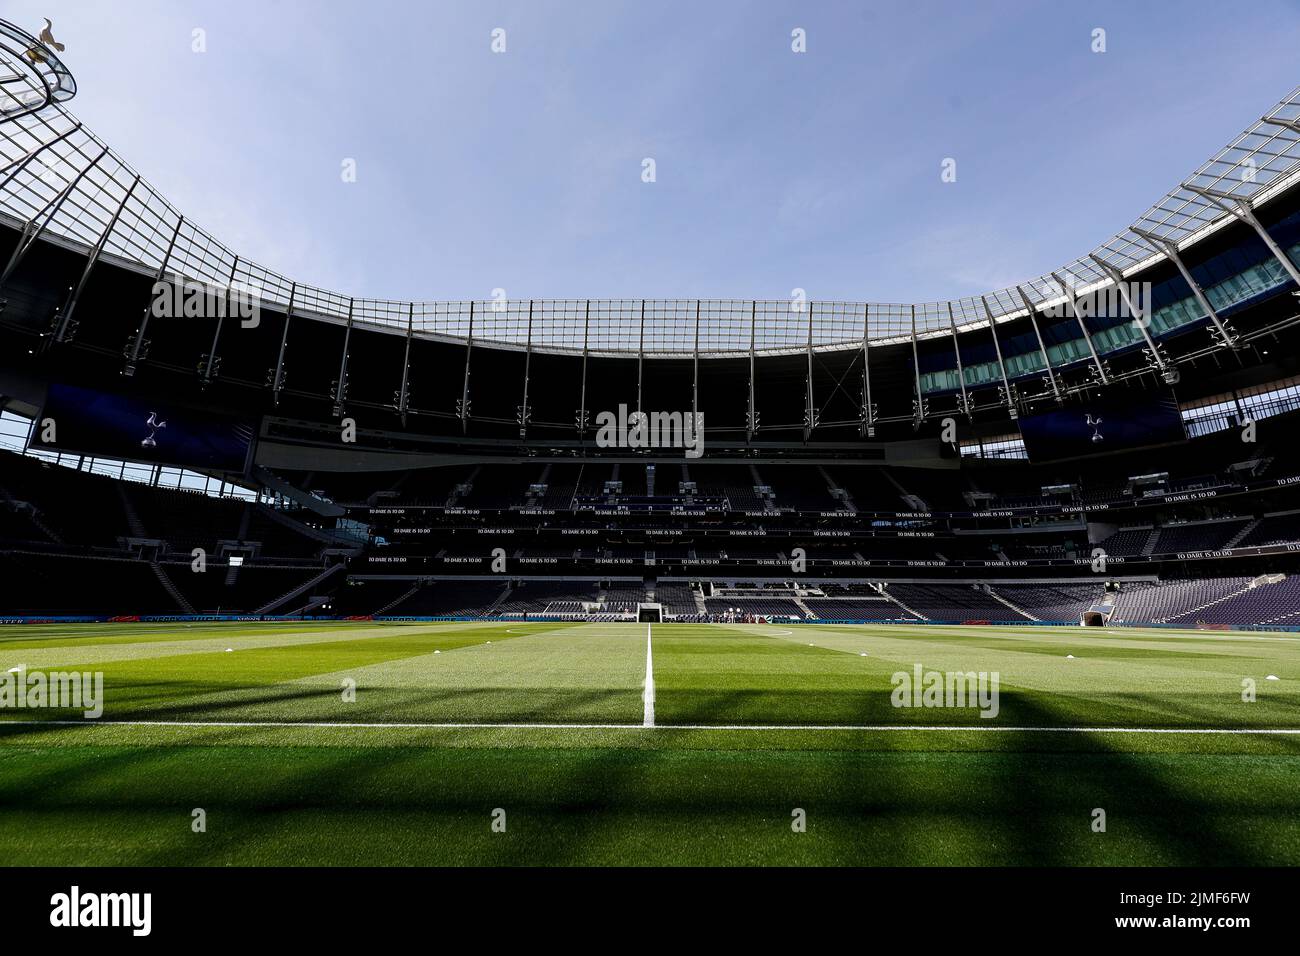 6th August 2022; Tottenham Hotspur Stadium. Tottenham, London, England; Premier League football, Tottenham versus Southampton: General view inside the Tottenham Hotspur Stadium Stock Photo